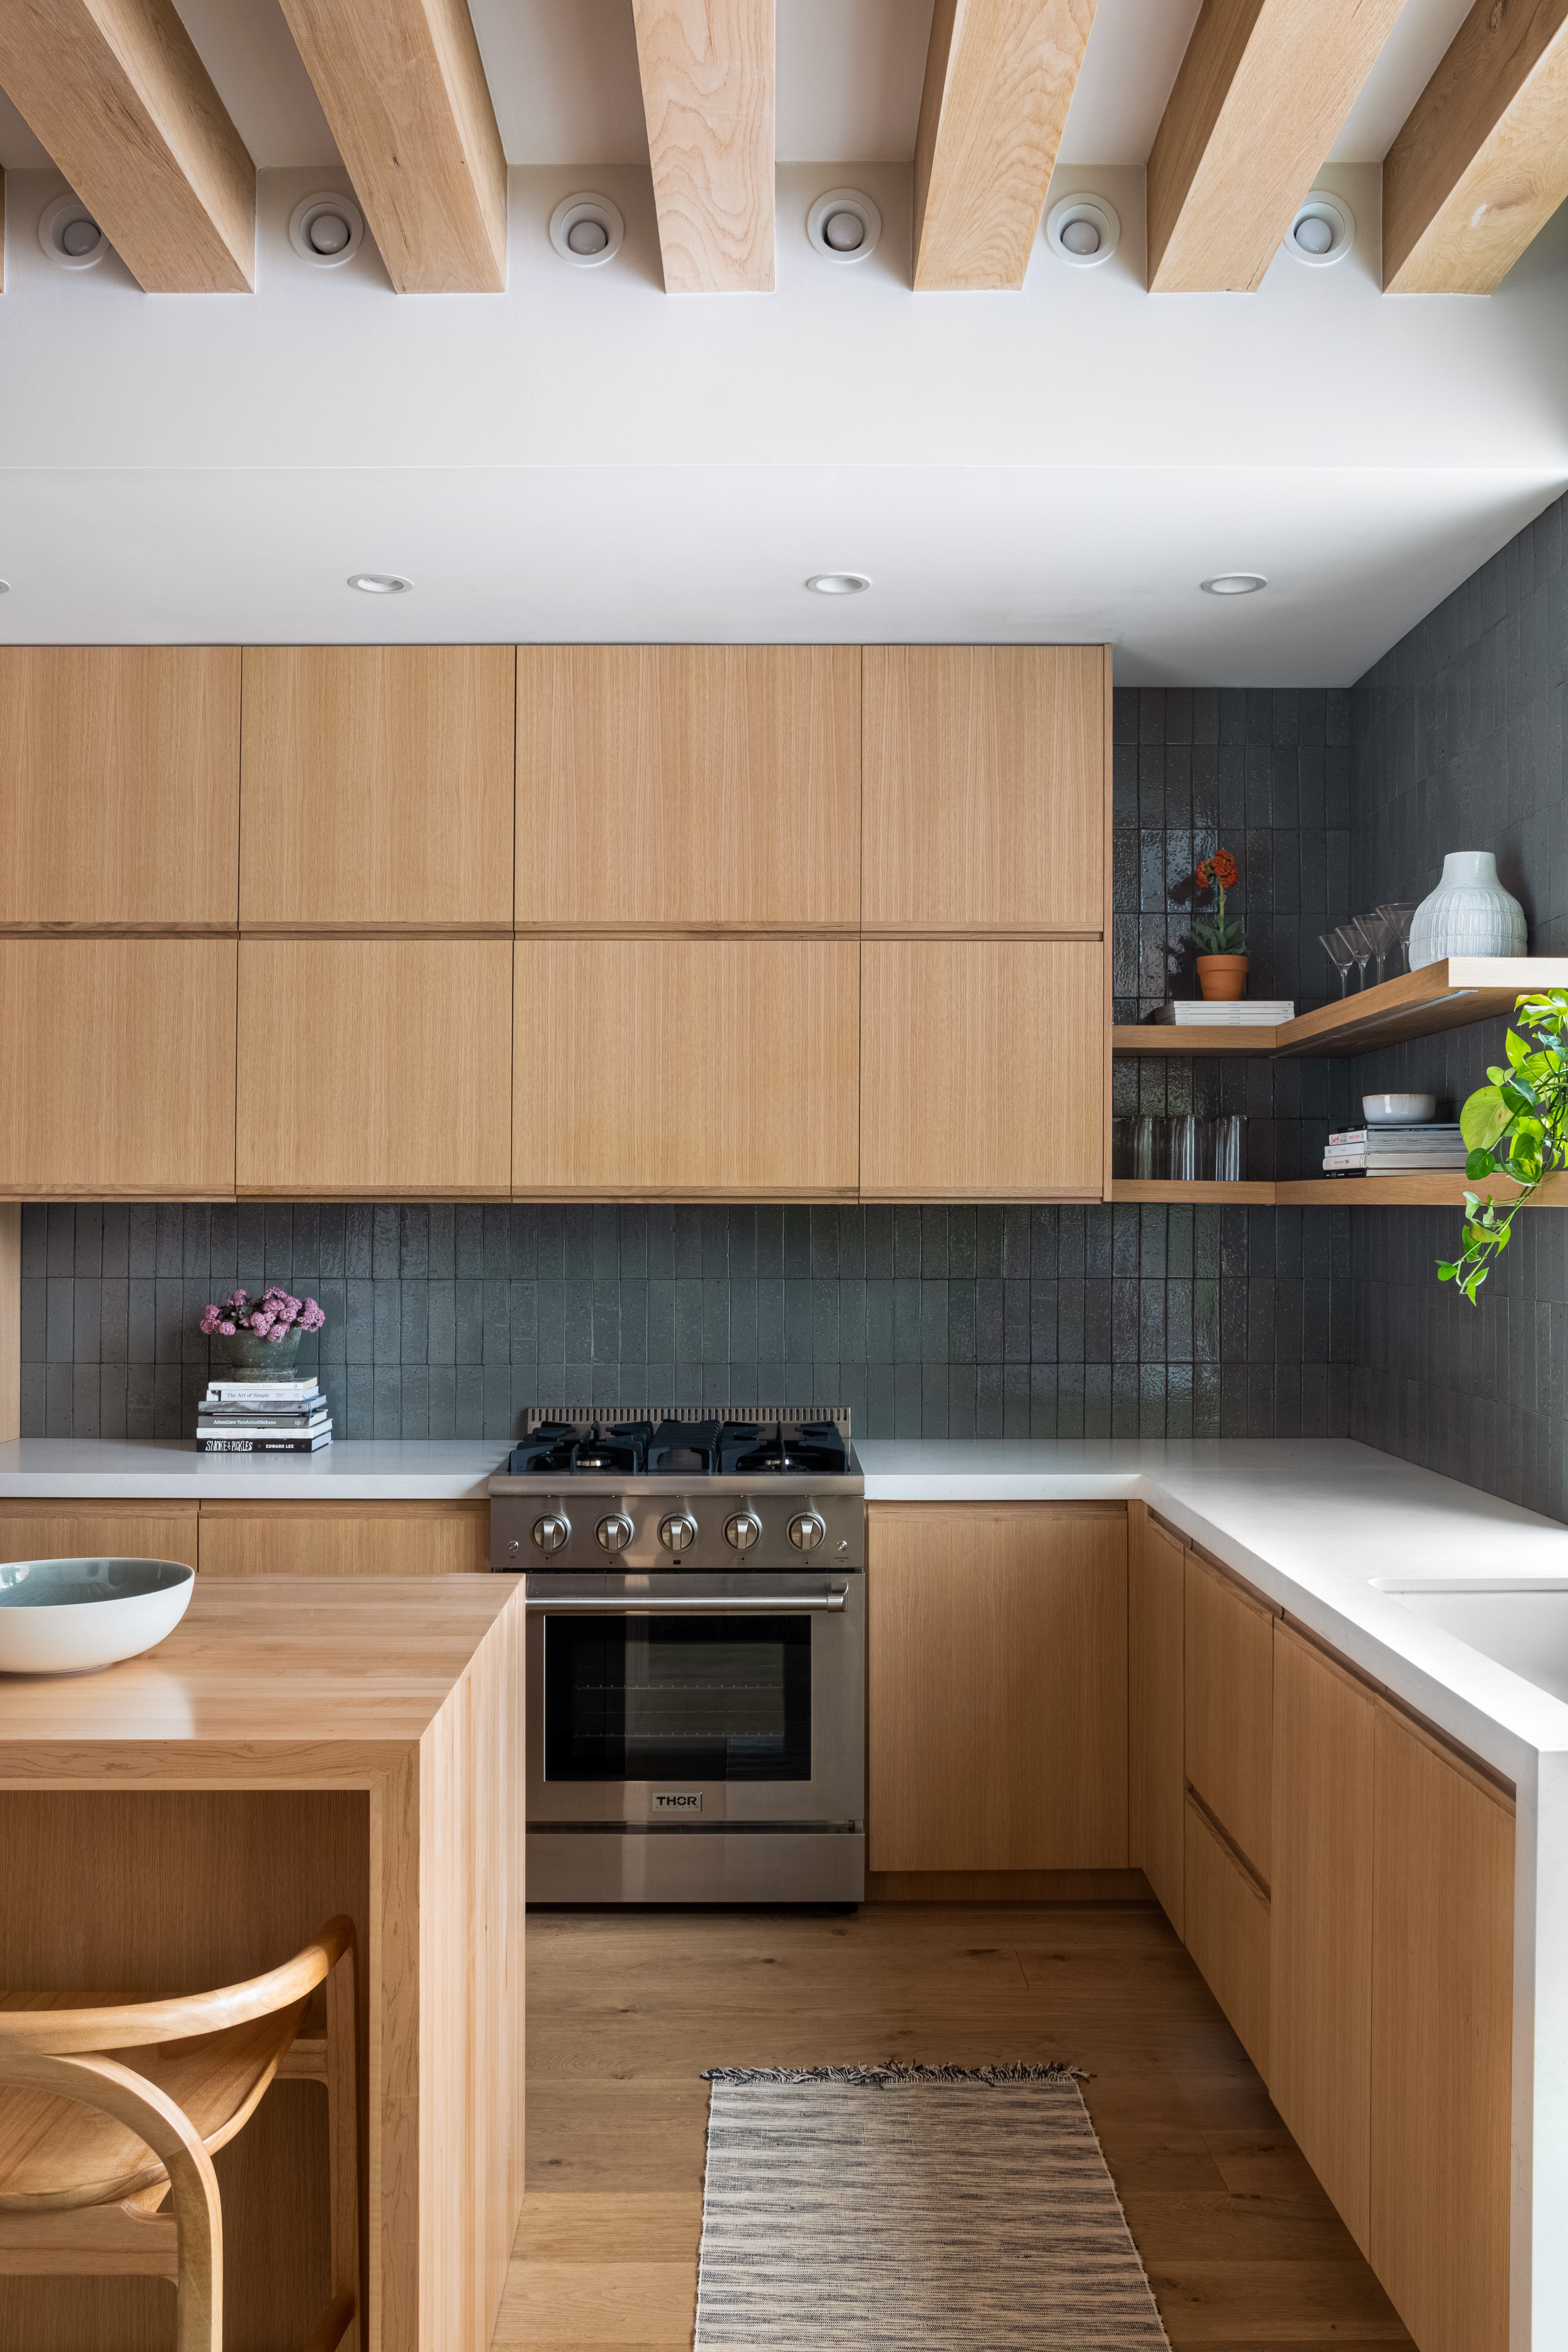 Modern kitchen with warm wood cabinets